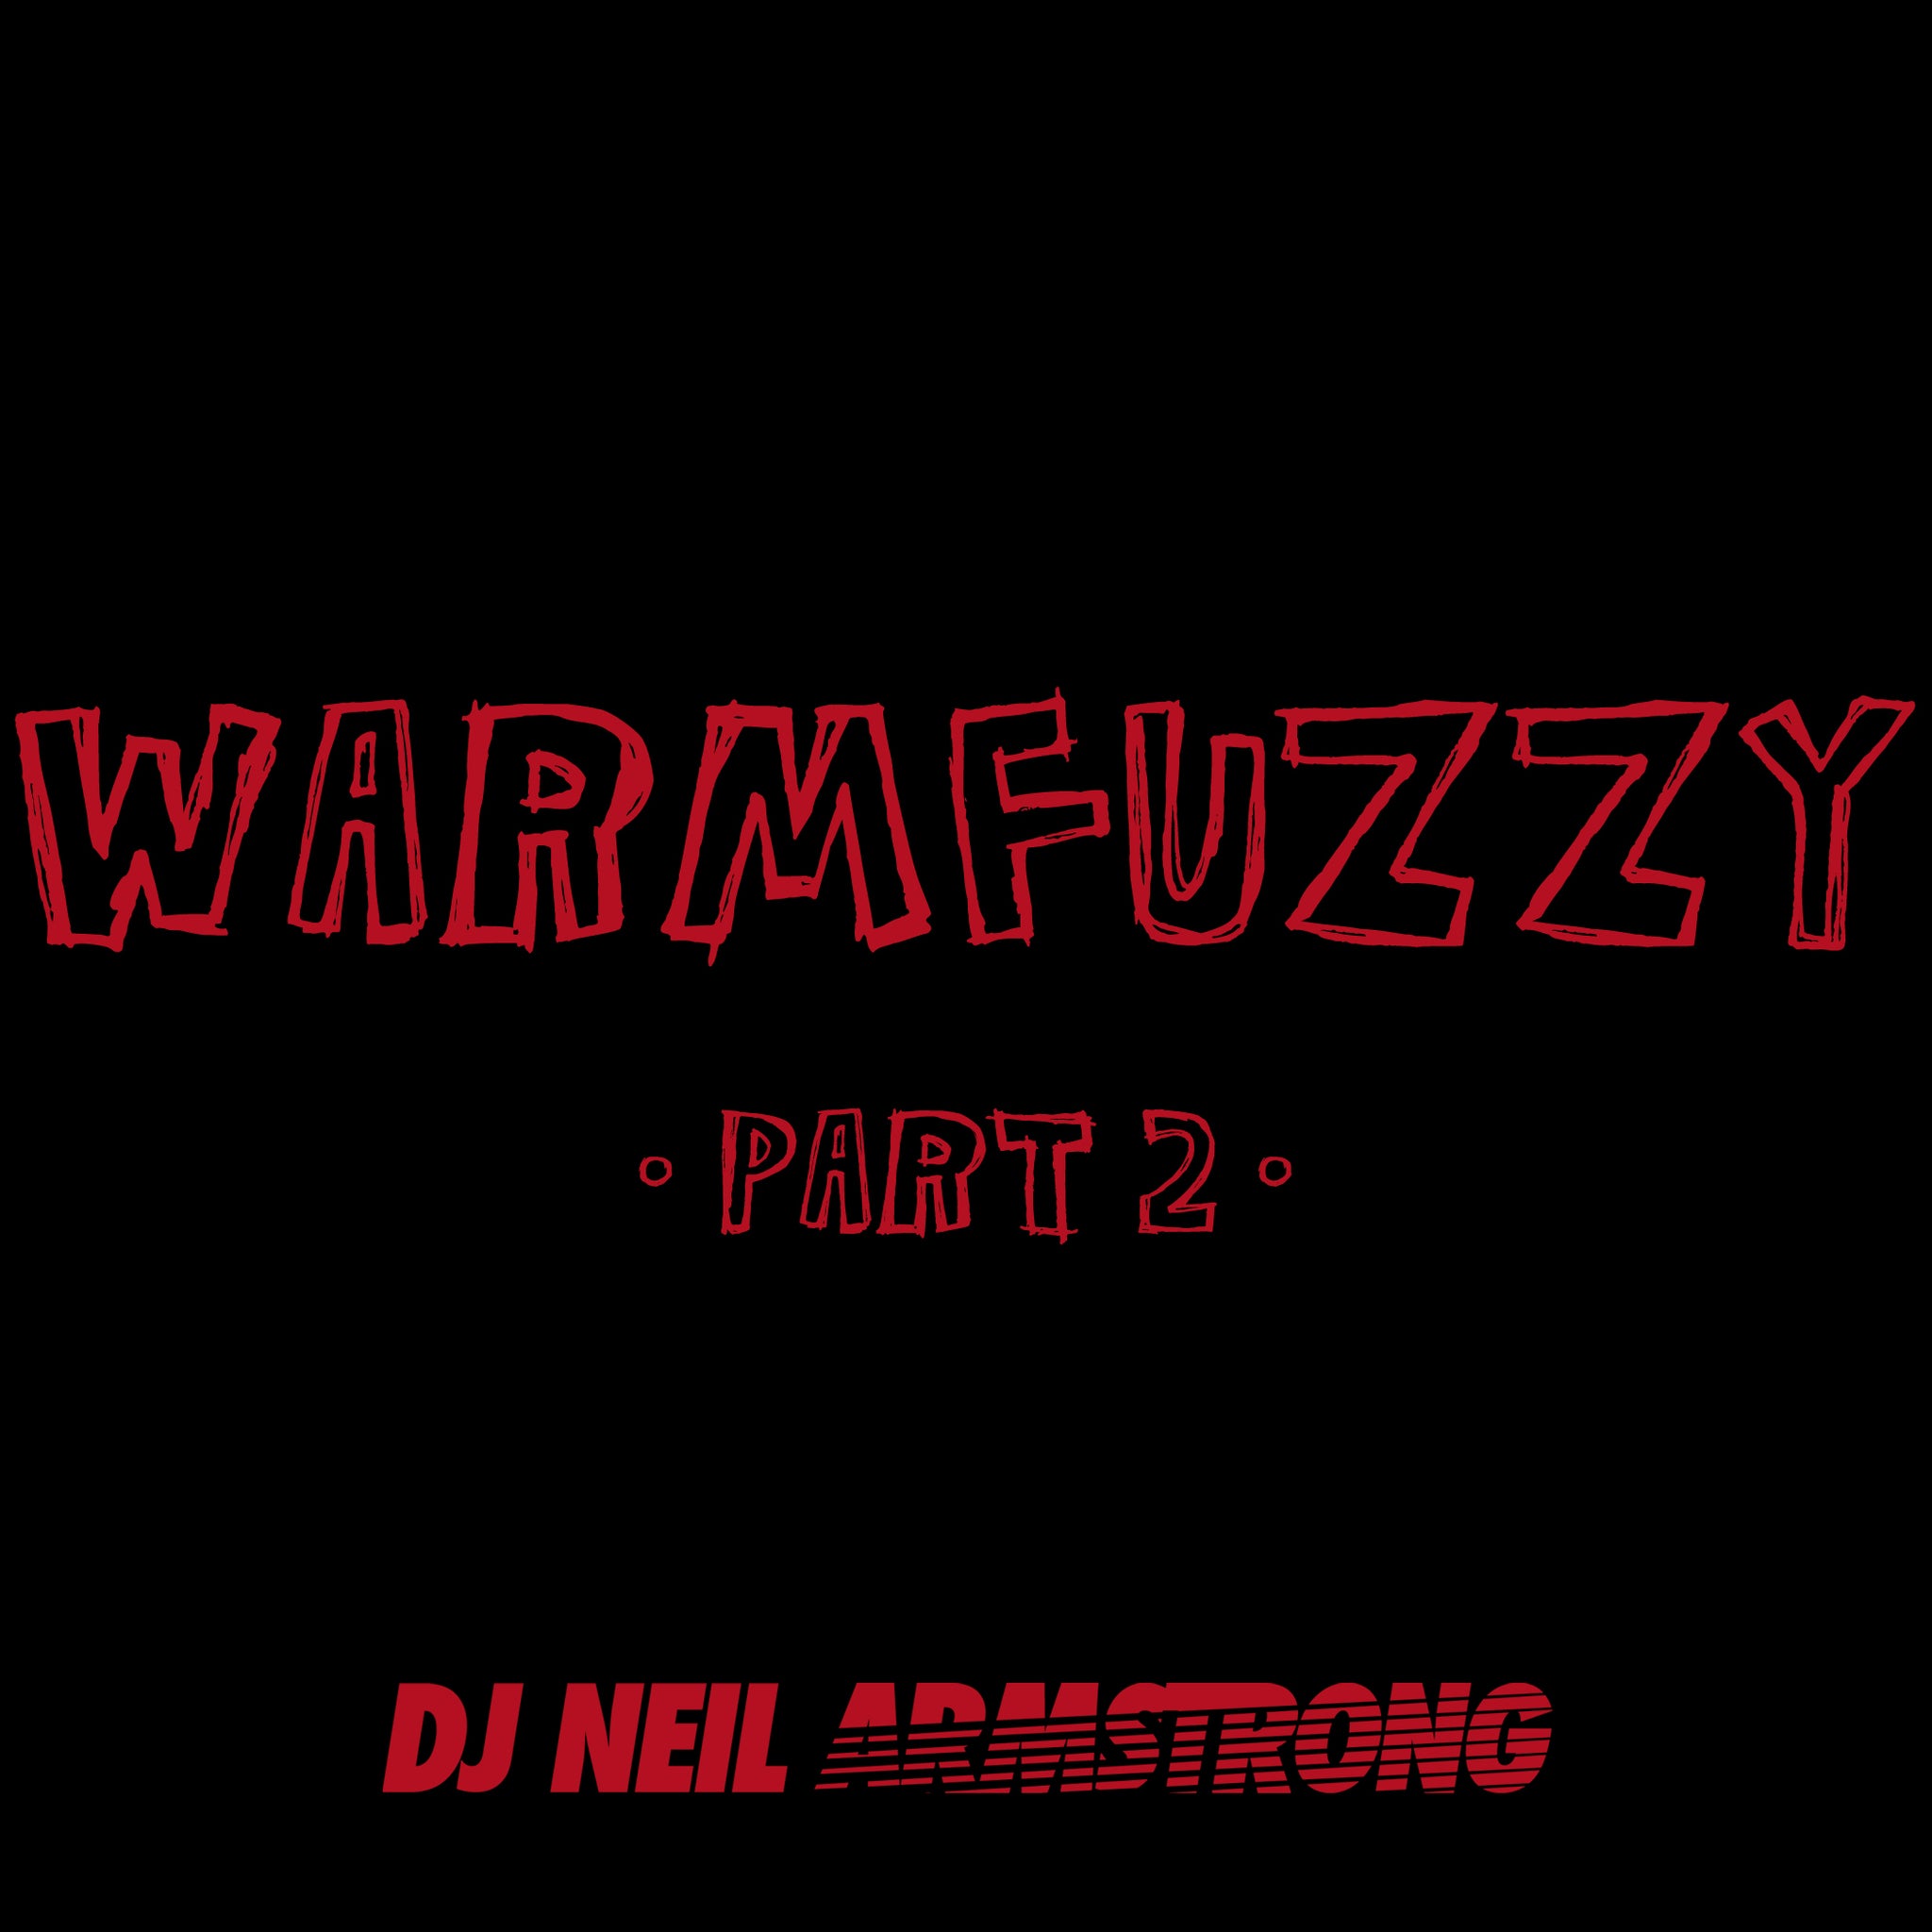 DJ Neil Armstrong - Warmfuzzy Part 2 [USB Mixtape]